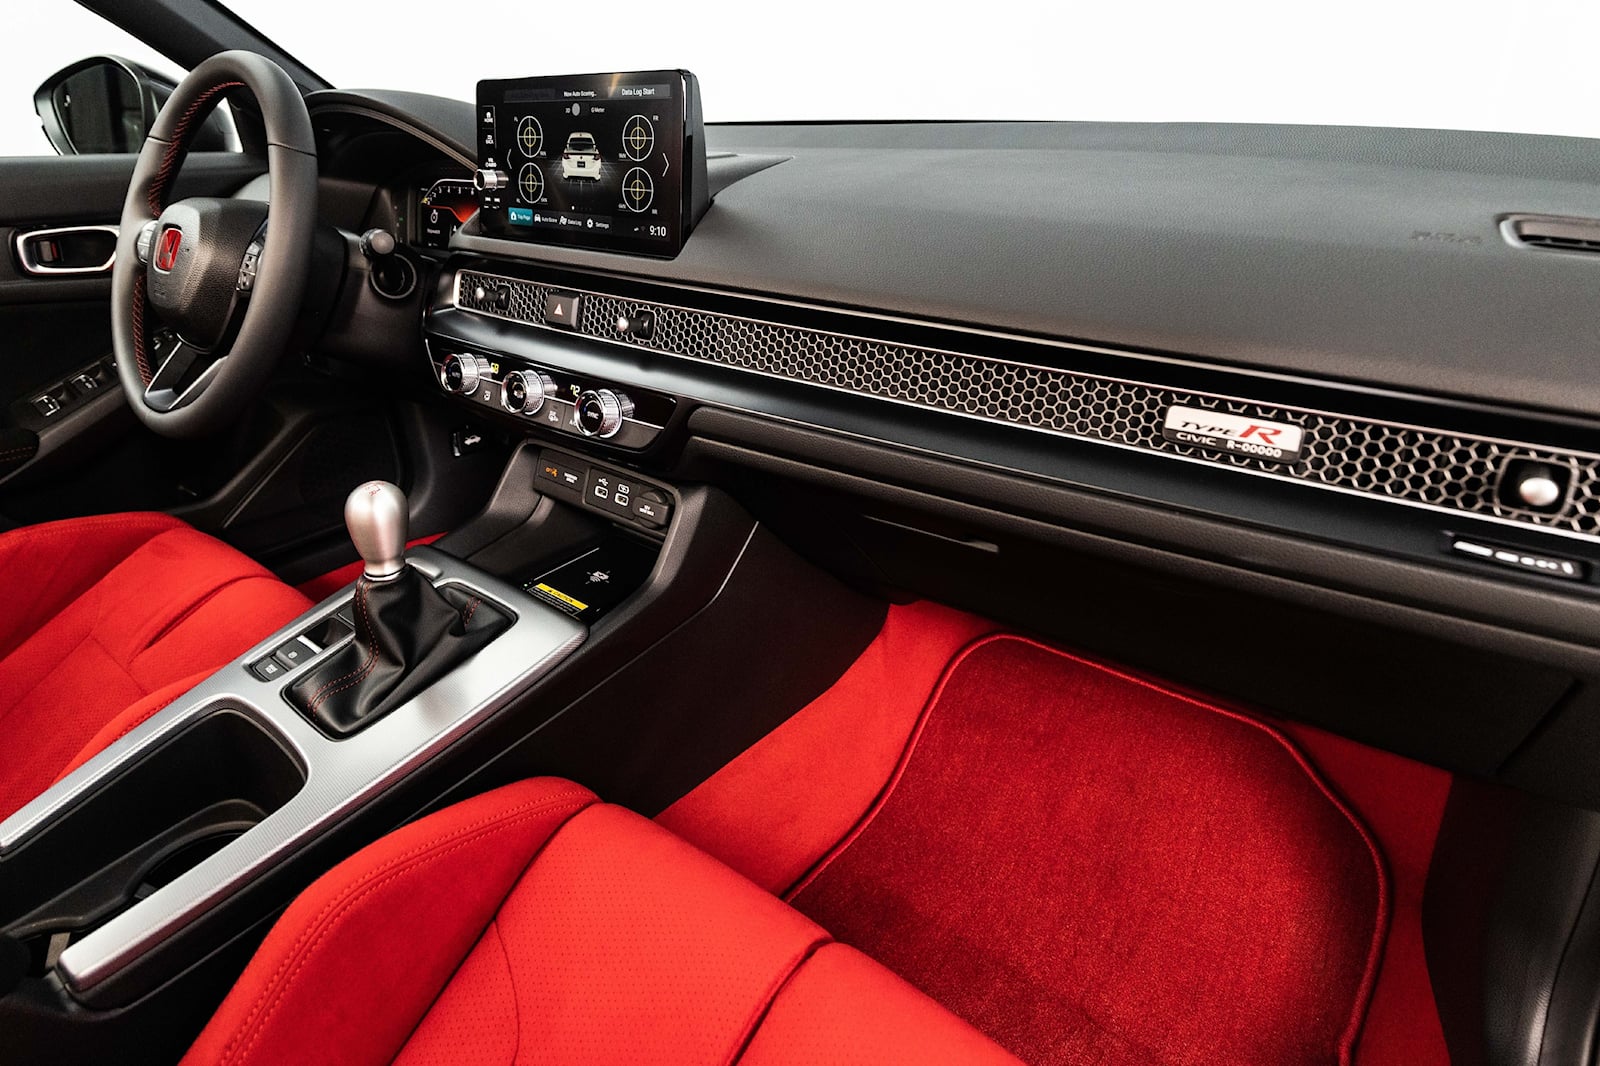 2020 Honda Civic Type R review: Better living through technology - CNET